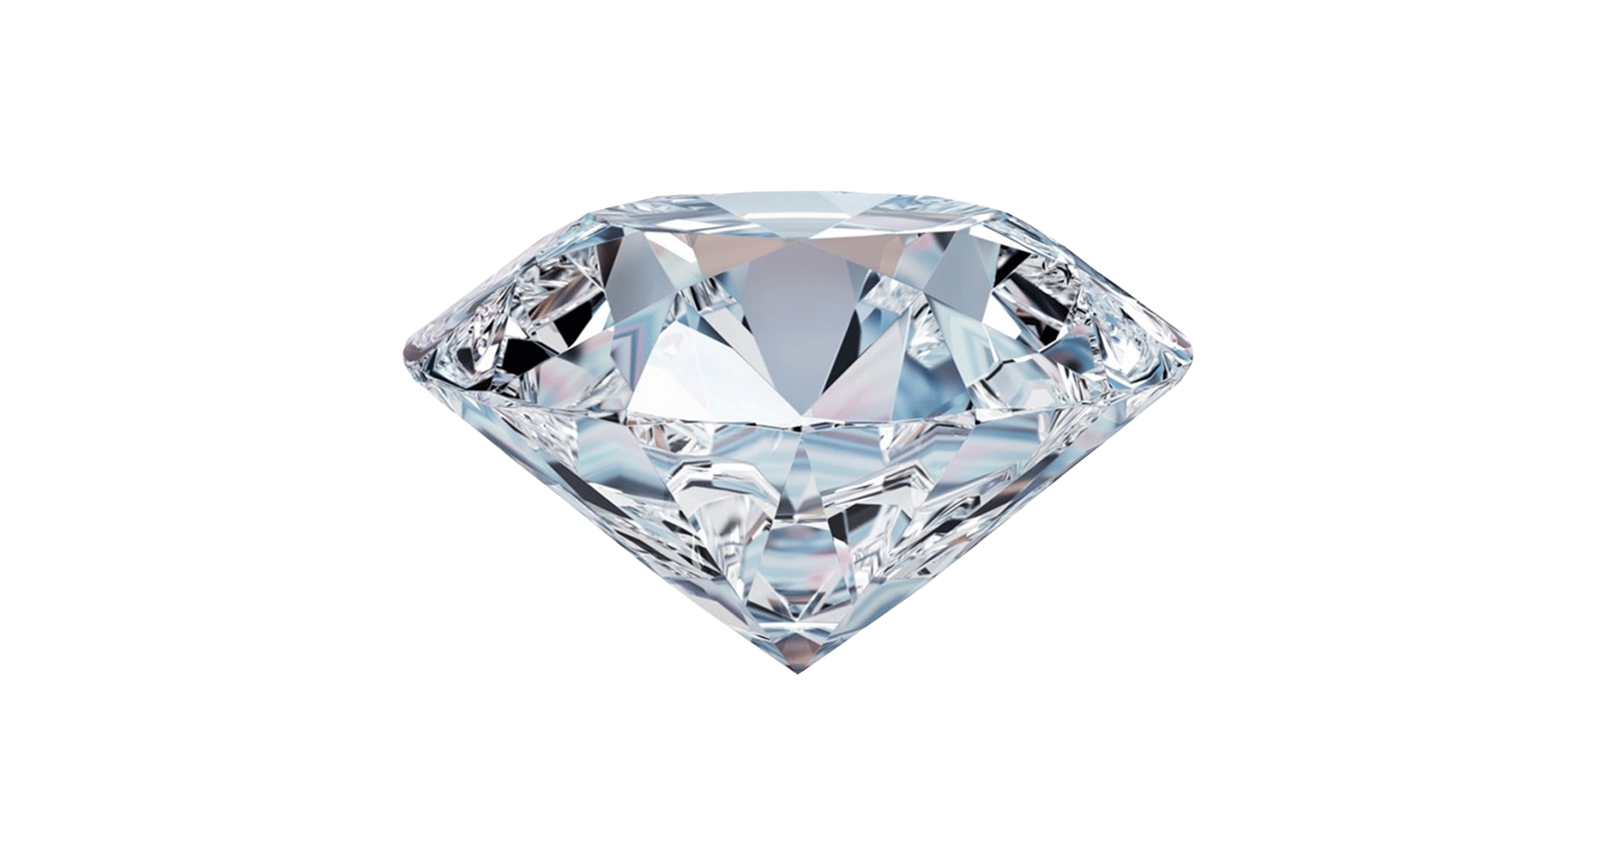 Traditional VS Fancy: Top Branded Diamond Cuts